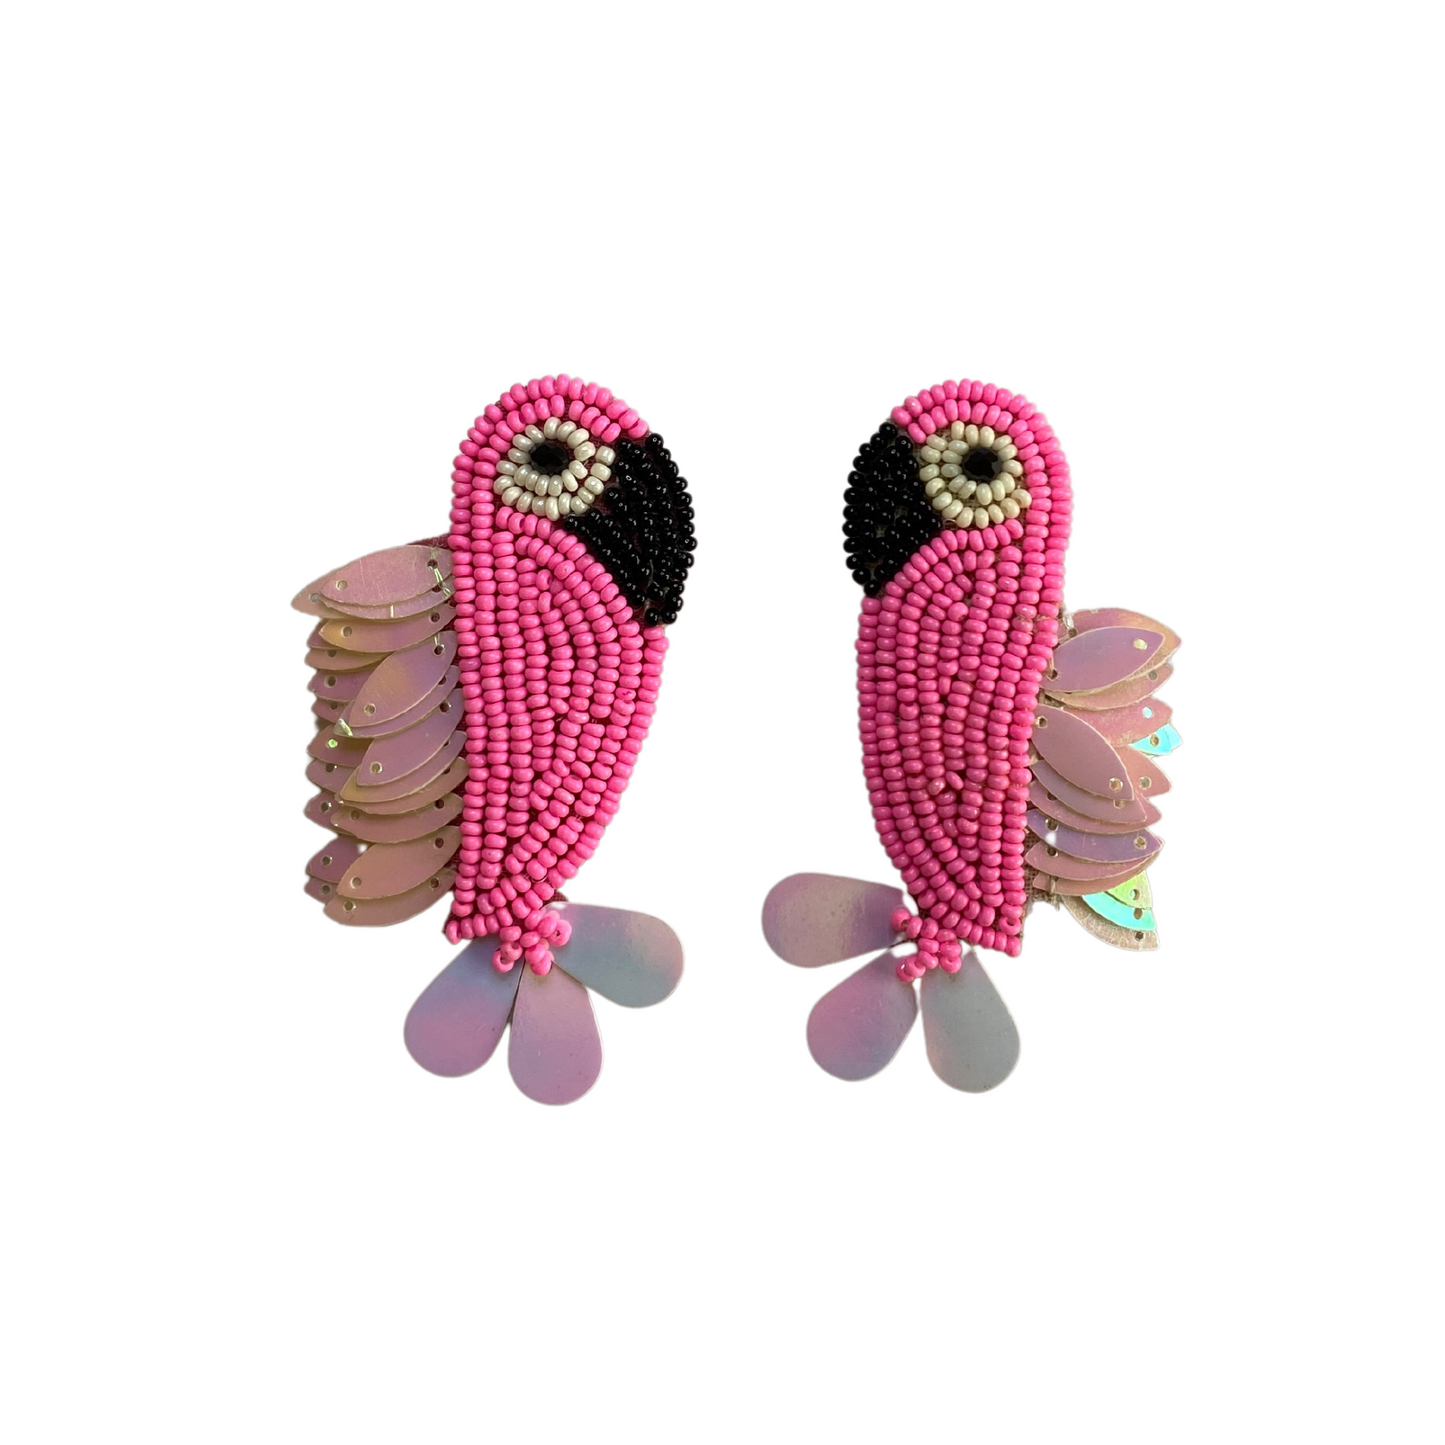 Peachy Parrot Earrings, Parrot Earrings, Beaded Earrings, Earrings, Vacation Accessory, Vacation Outfit, Beach Accessories, Pool Accessories, Accessories